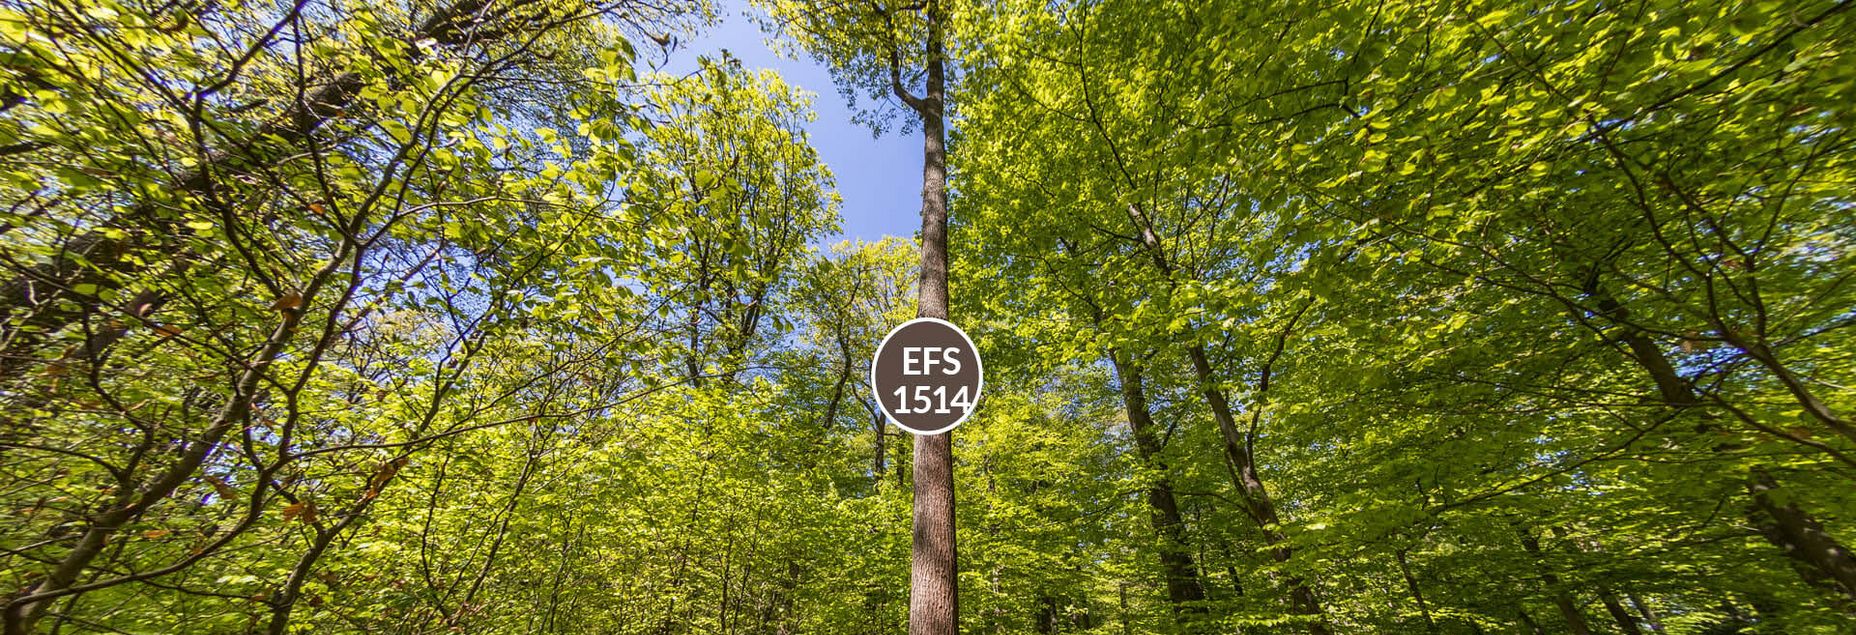 Baum EFS 1514 - Fisheyeperspektive